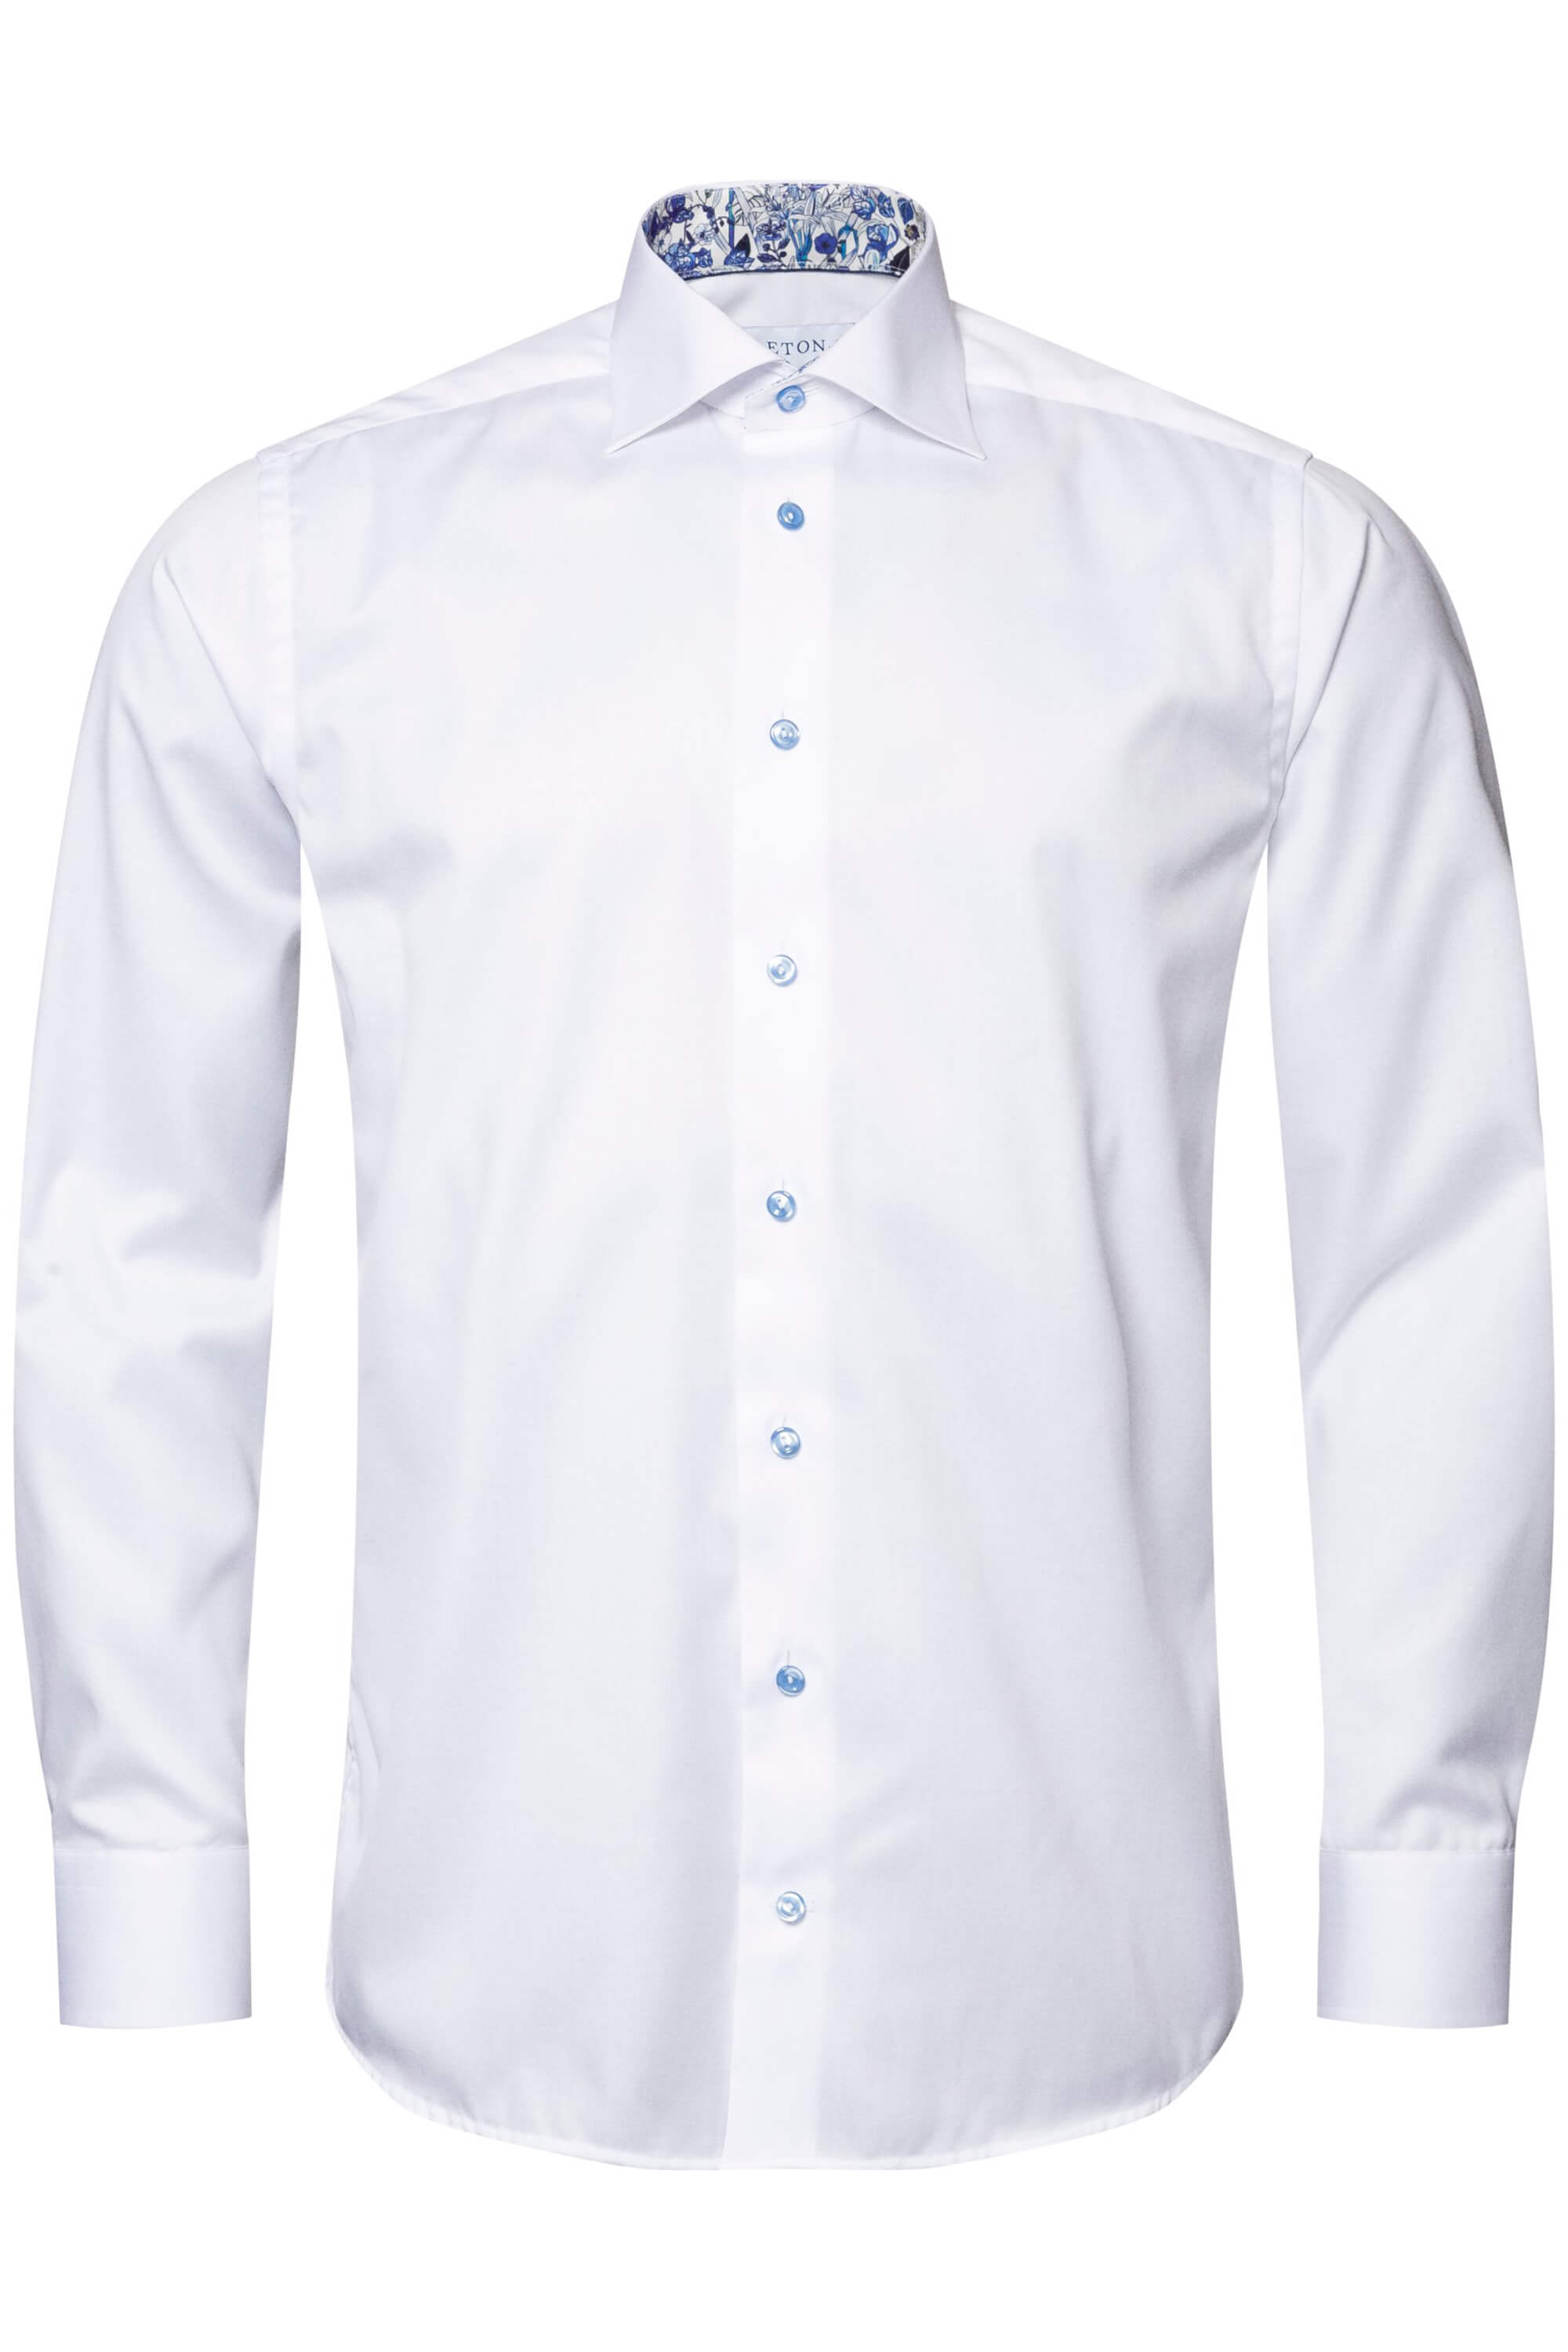 Eton White Signature Twill Shirt